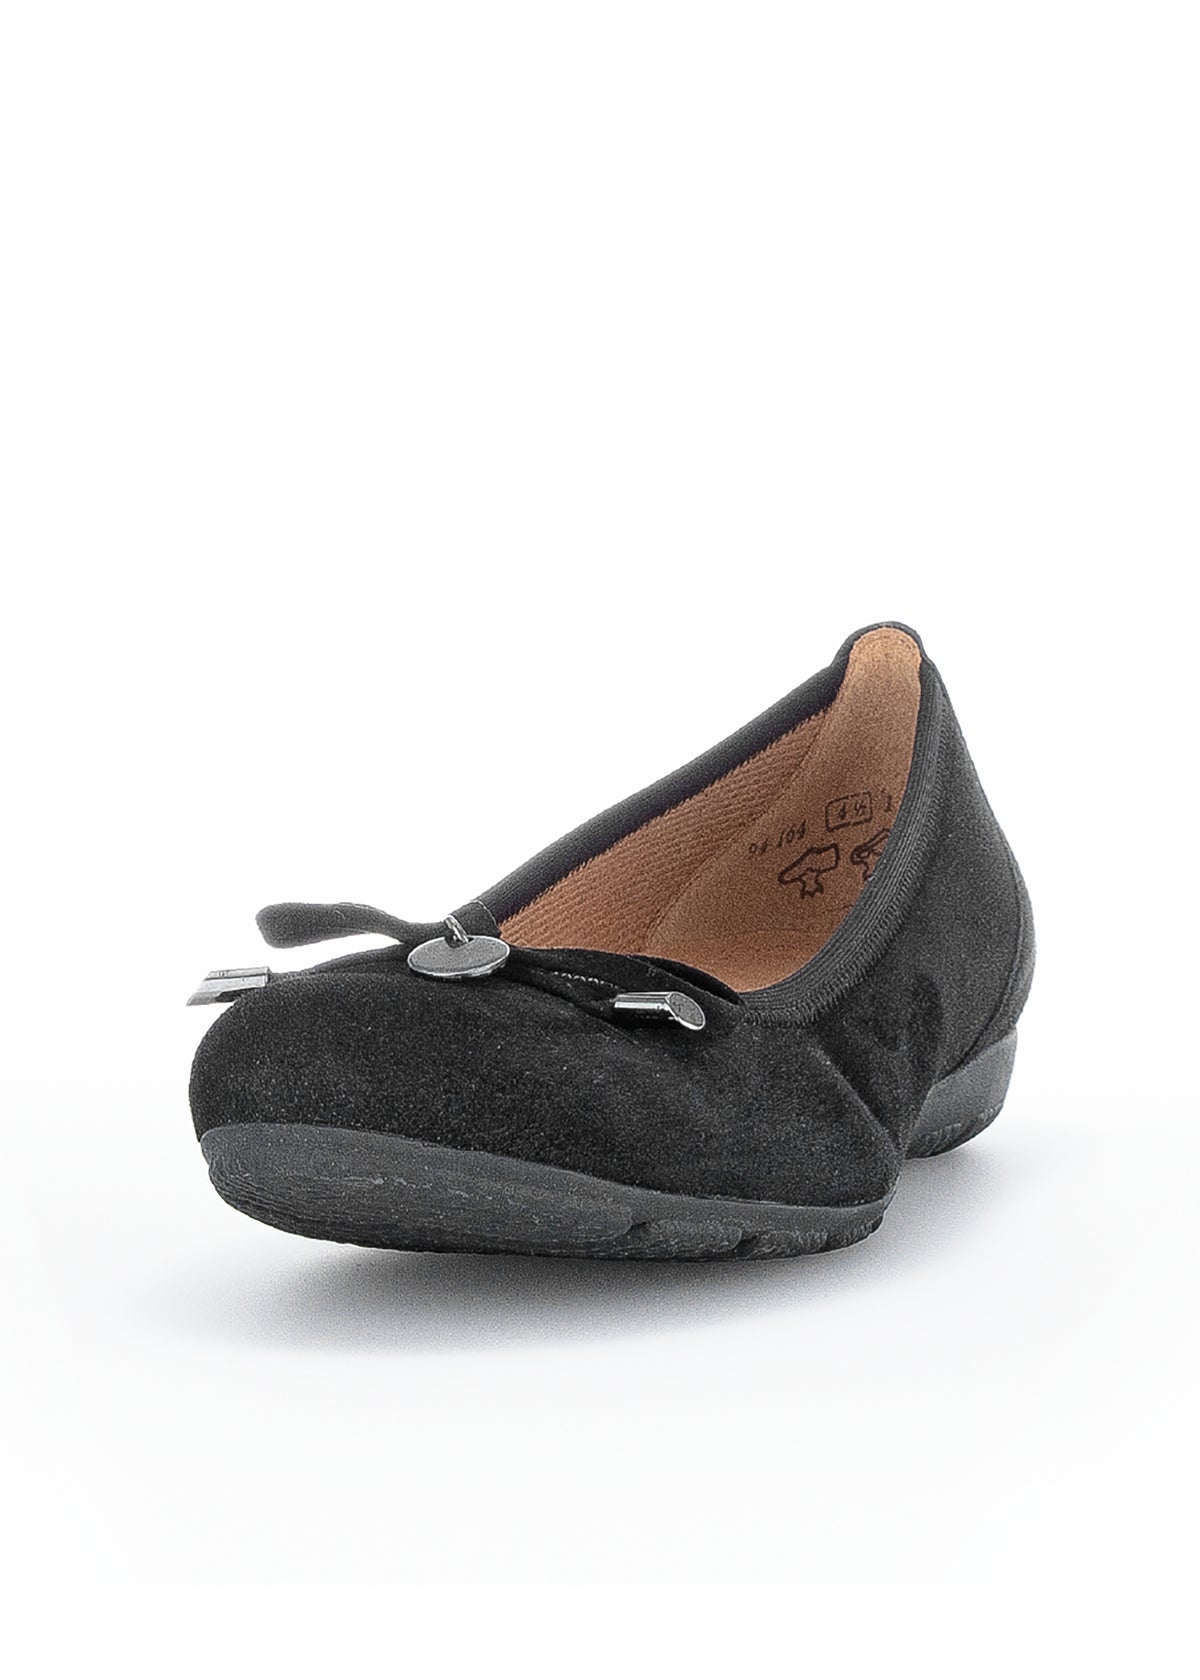 Ballerina shoes - black nubuck leather, bow decoration